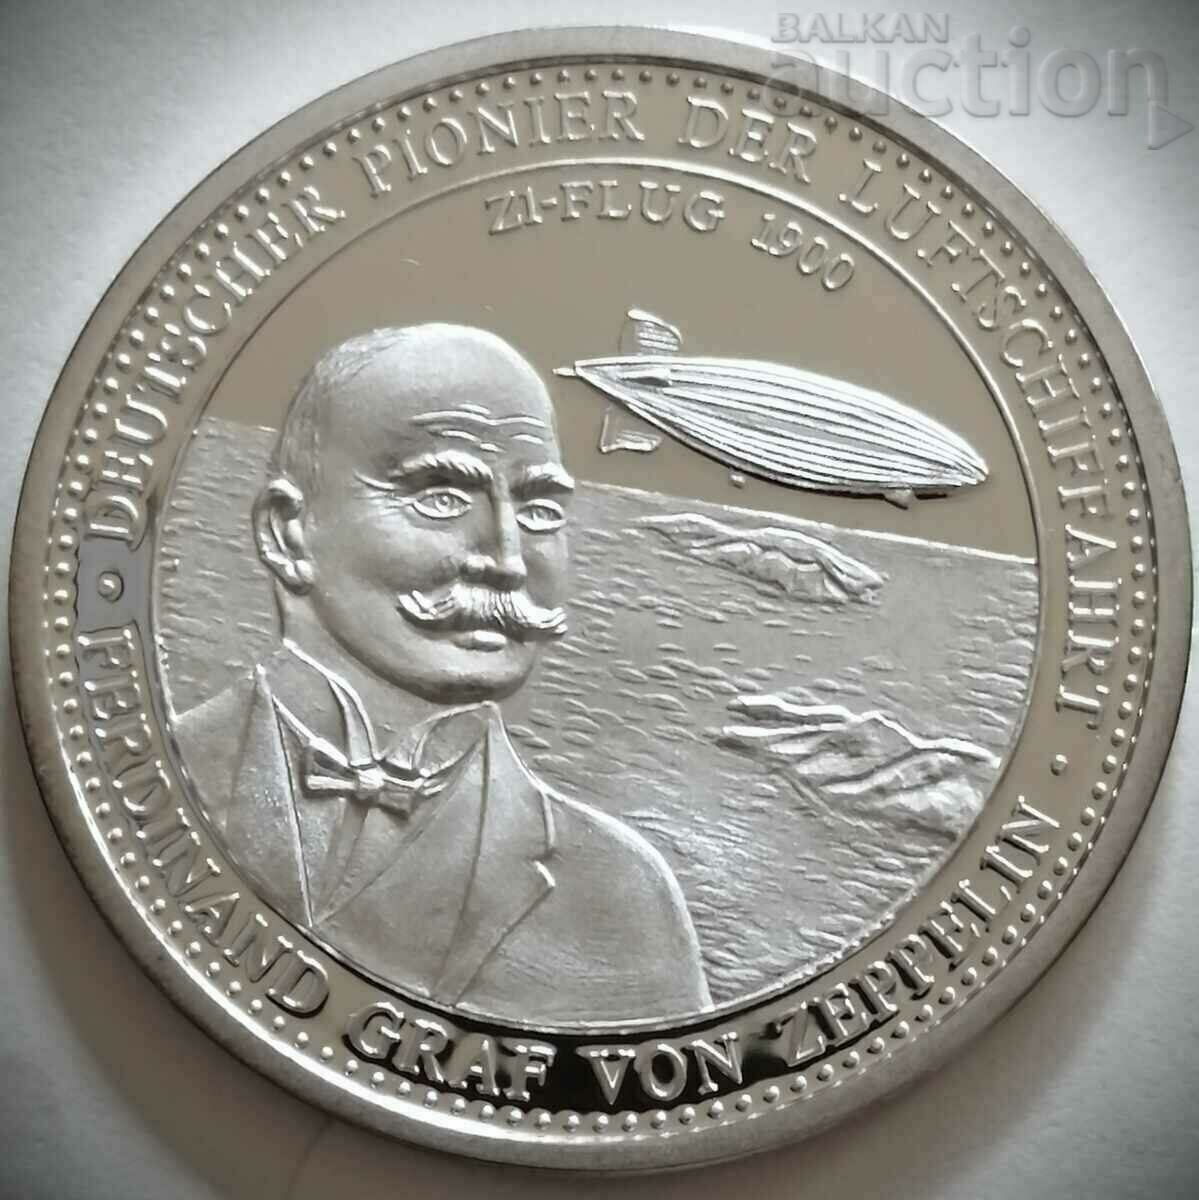 Count Zeppelin - Ασημένιο μετάλλιο, Γερμανία 1990. FRG